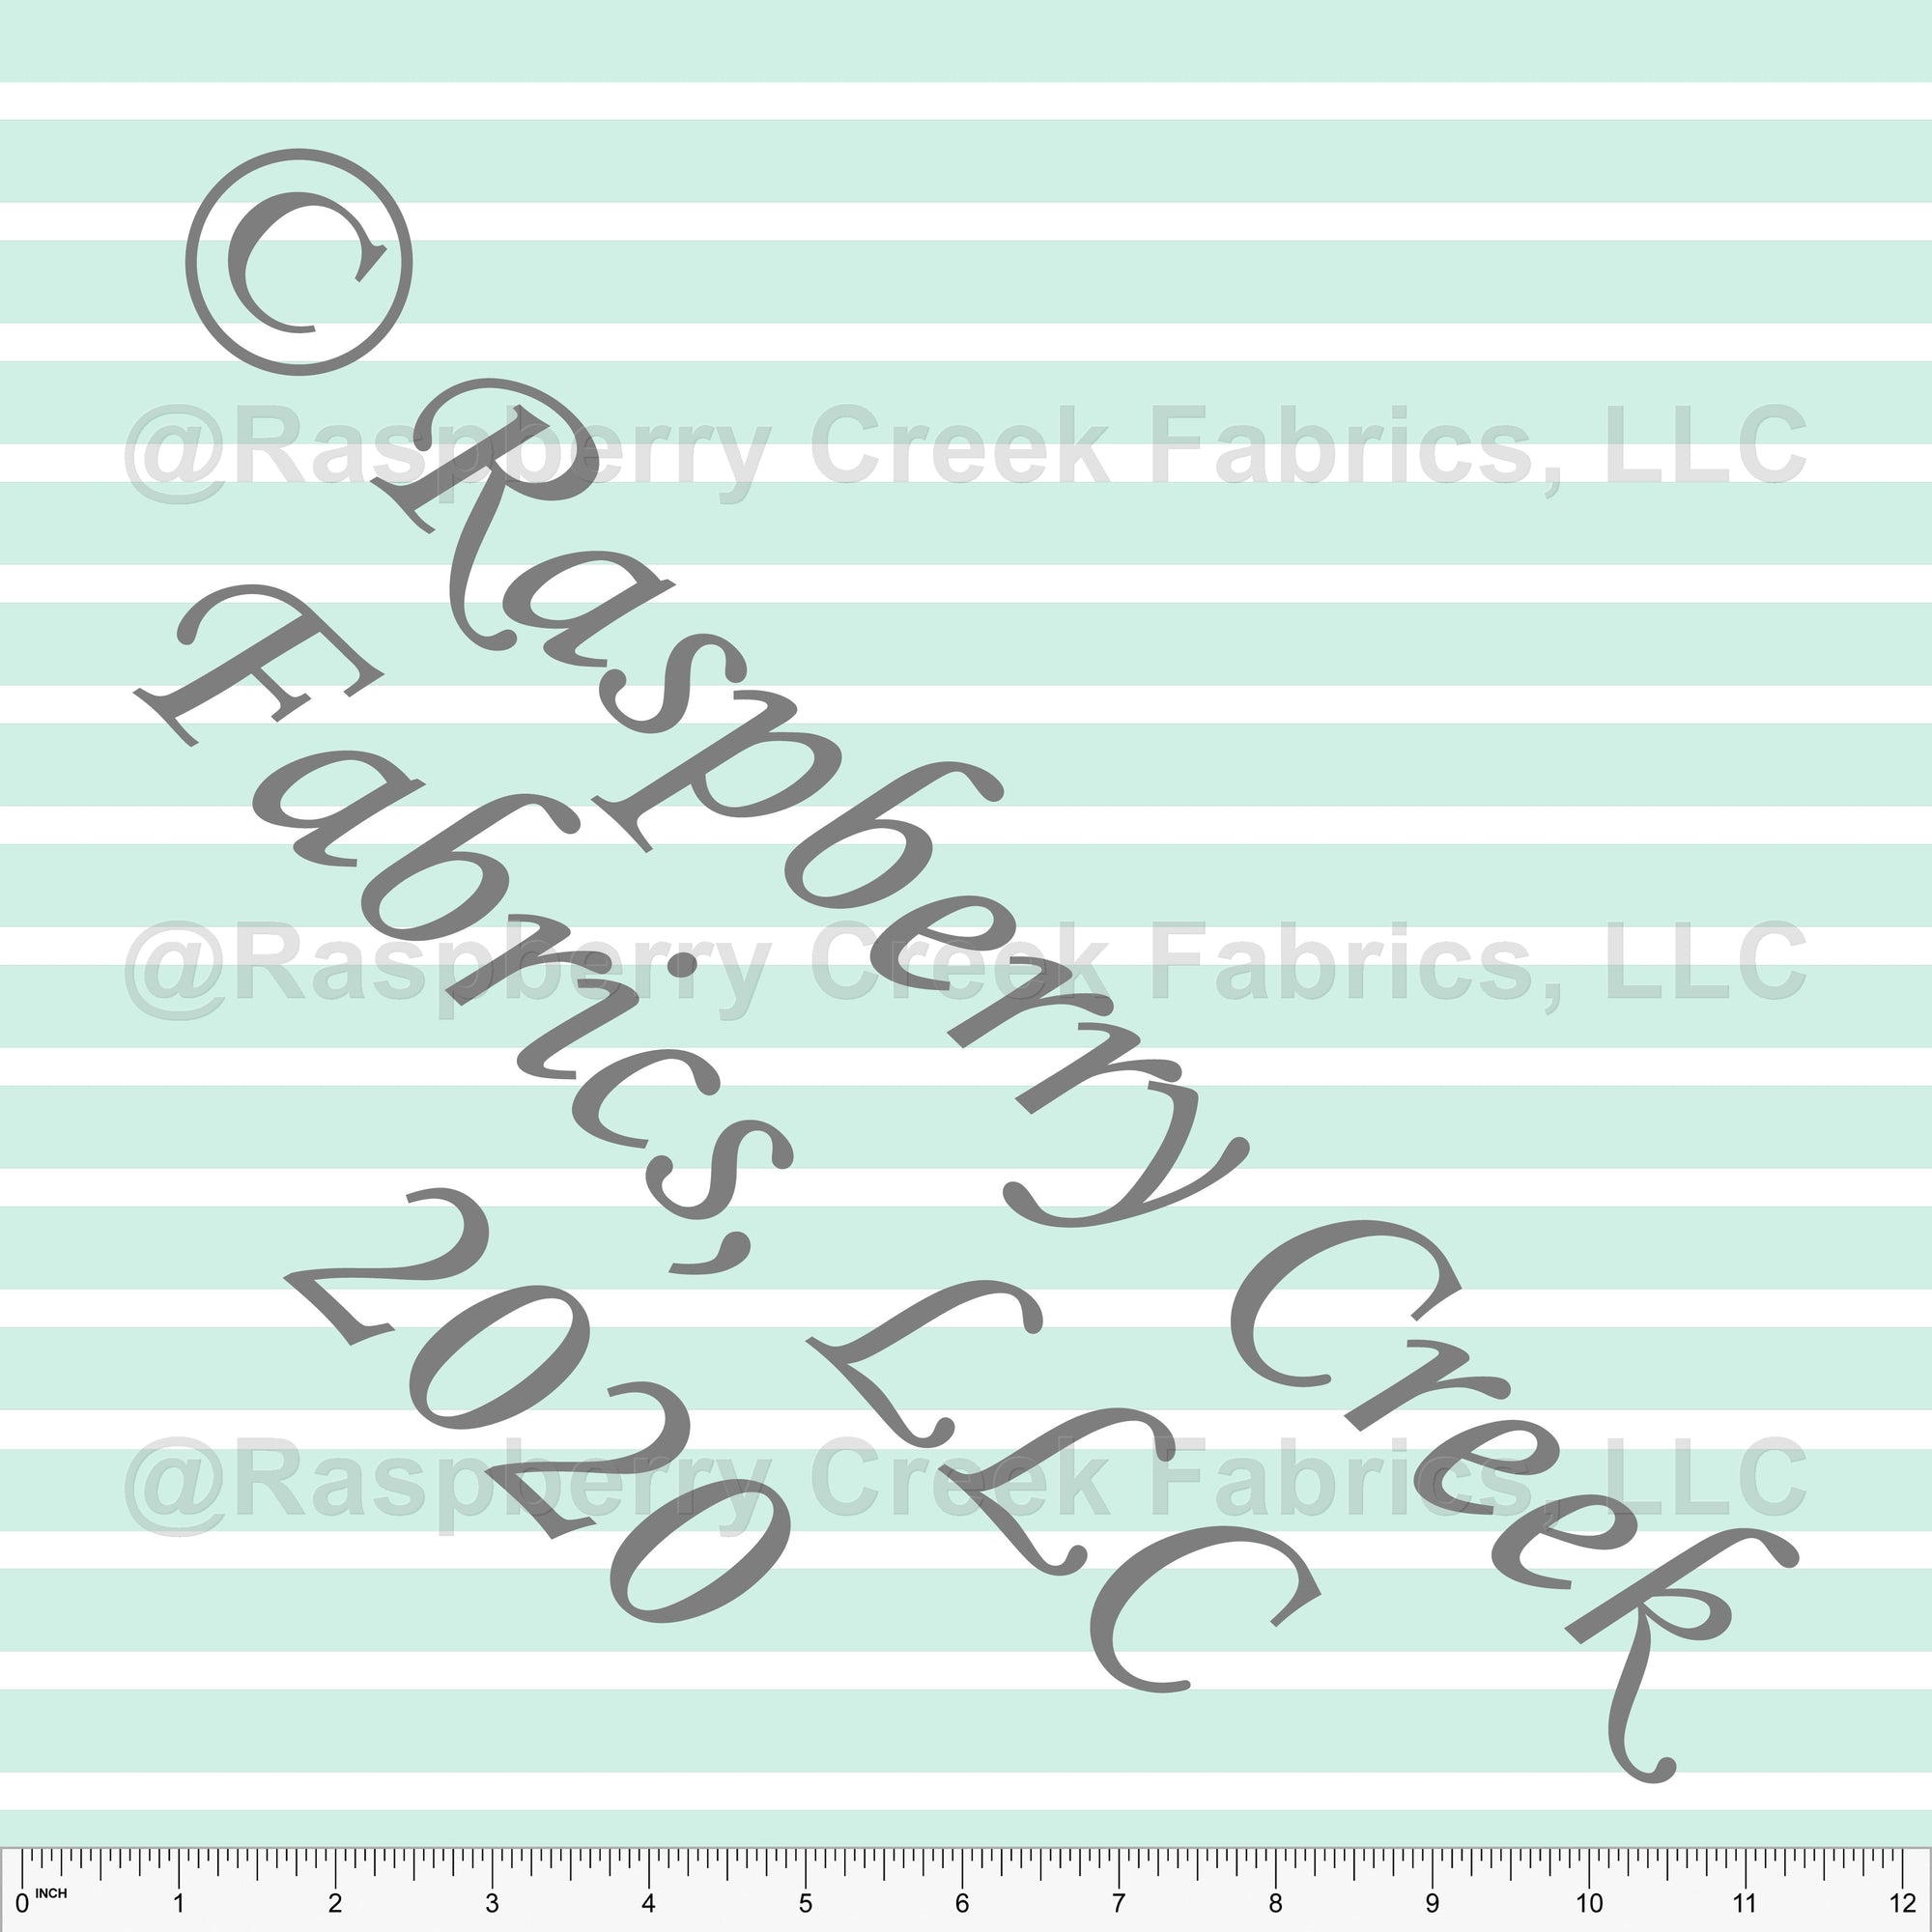 Mint and White Stripe, Basics for CLUB Fabrics Fabric, Raspberry Creek Fabrics, watermarked